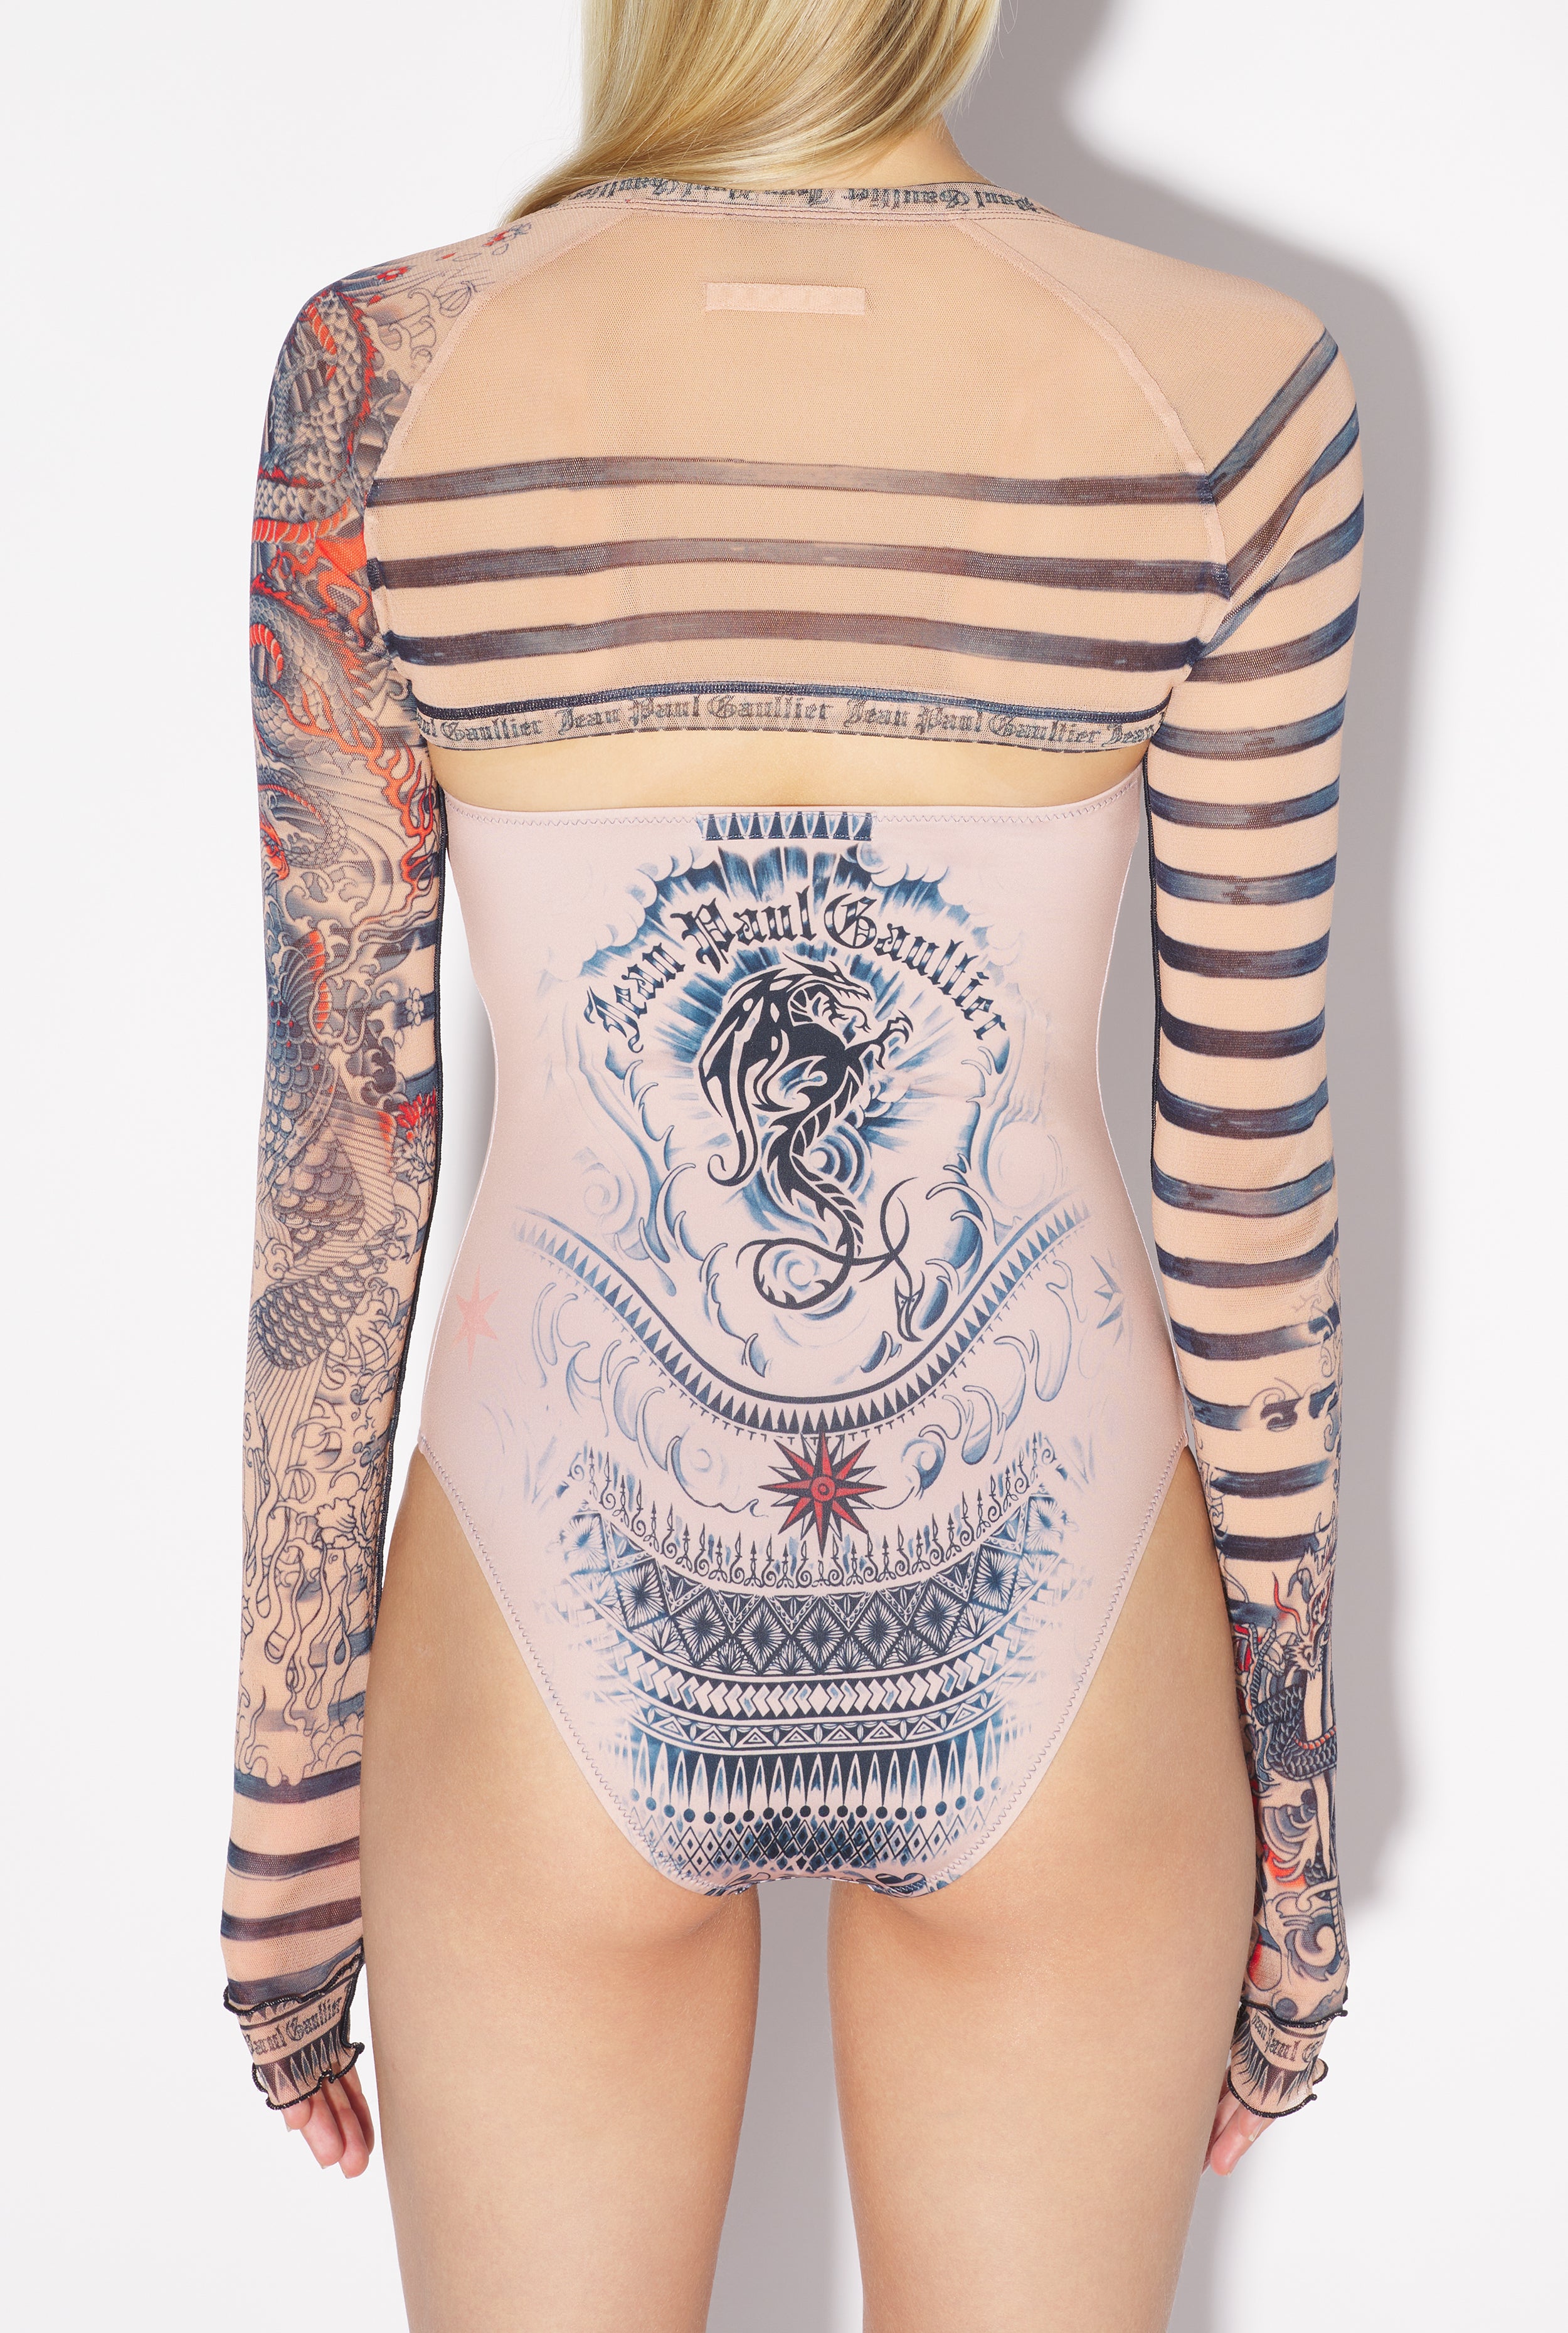 The Nude Sailor Tattoo Sleeves